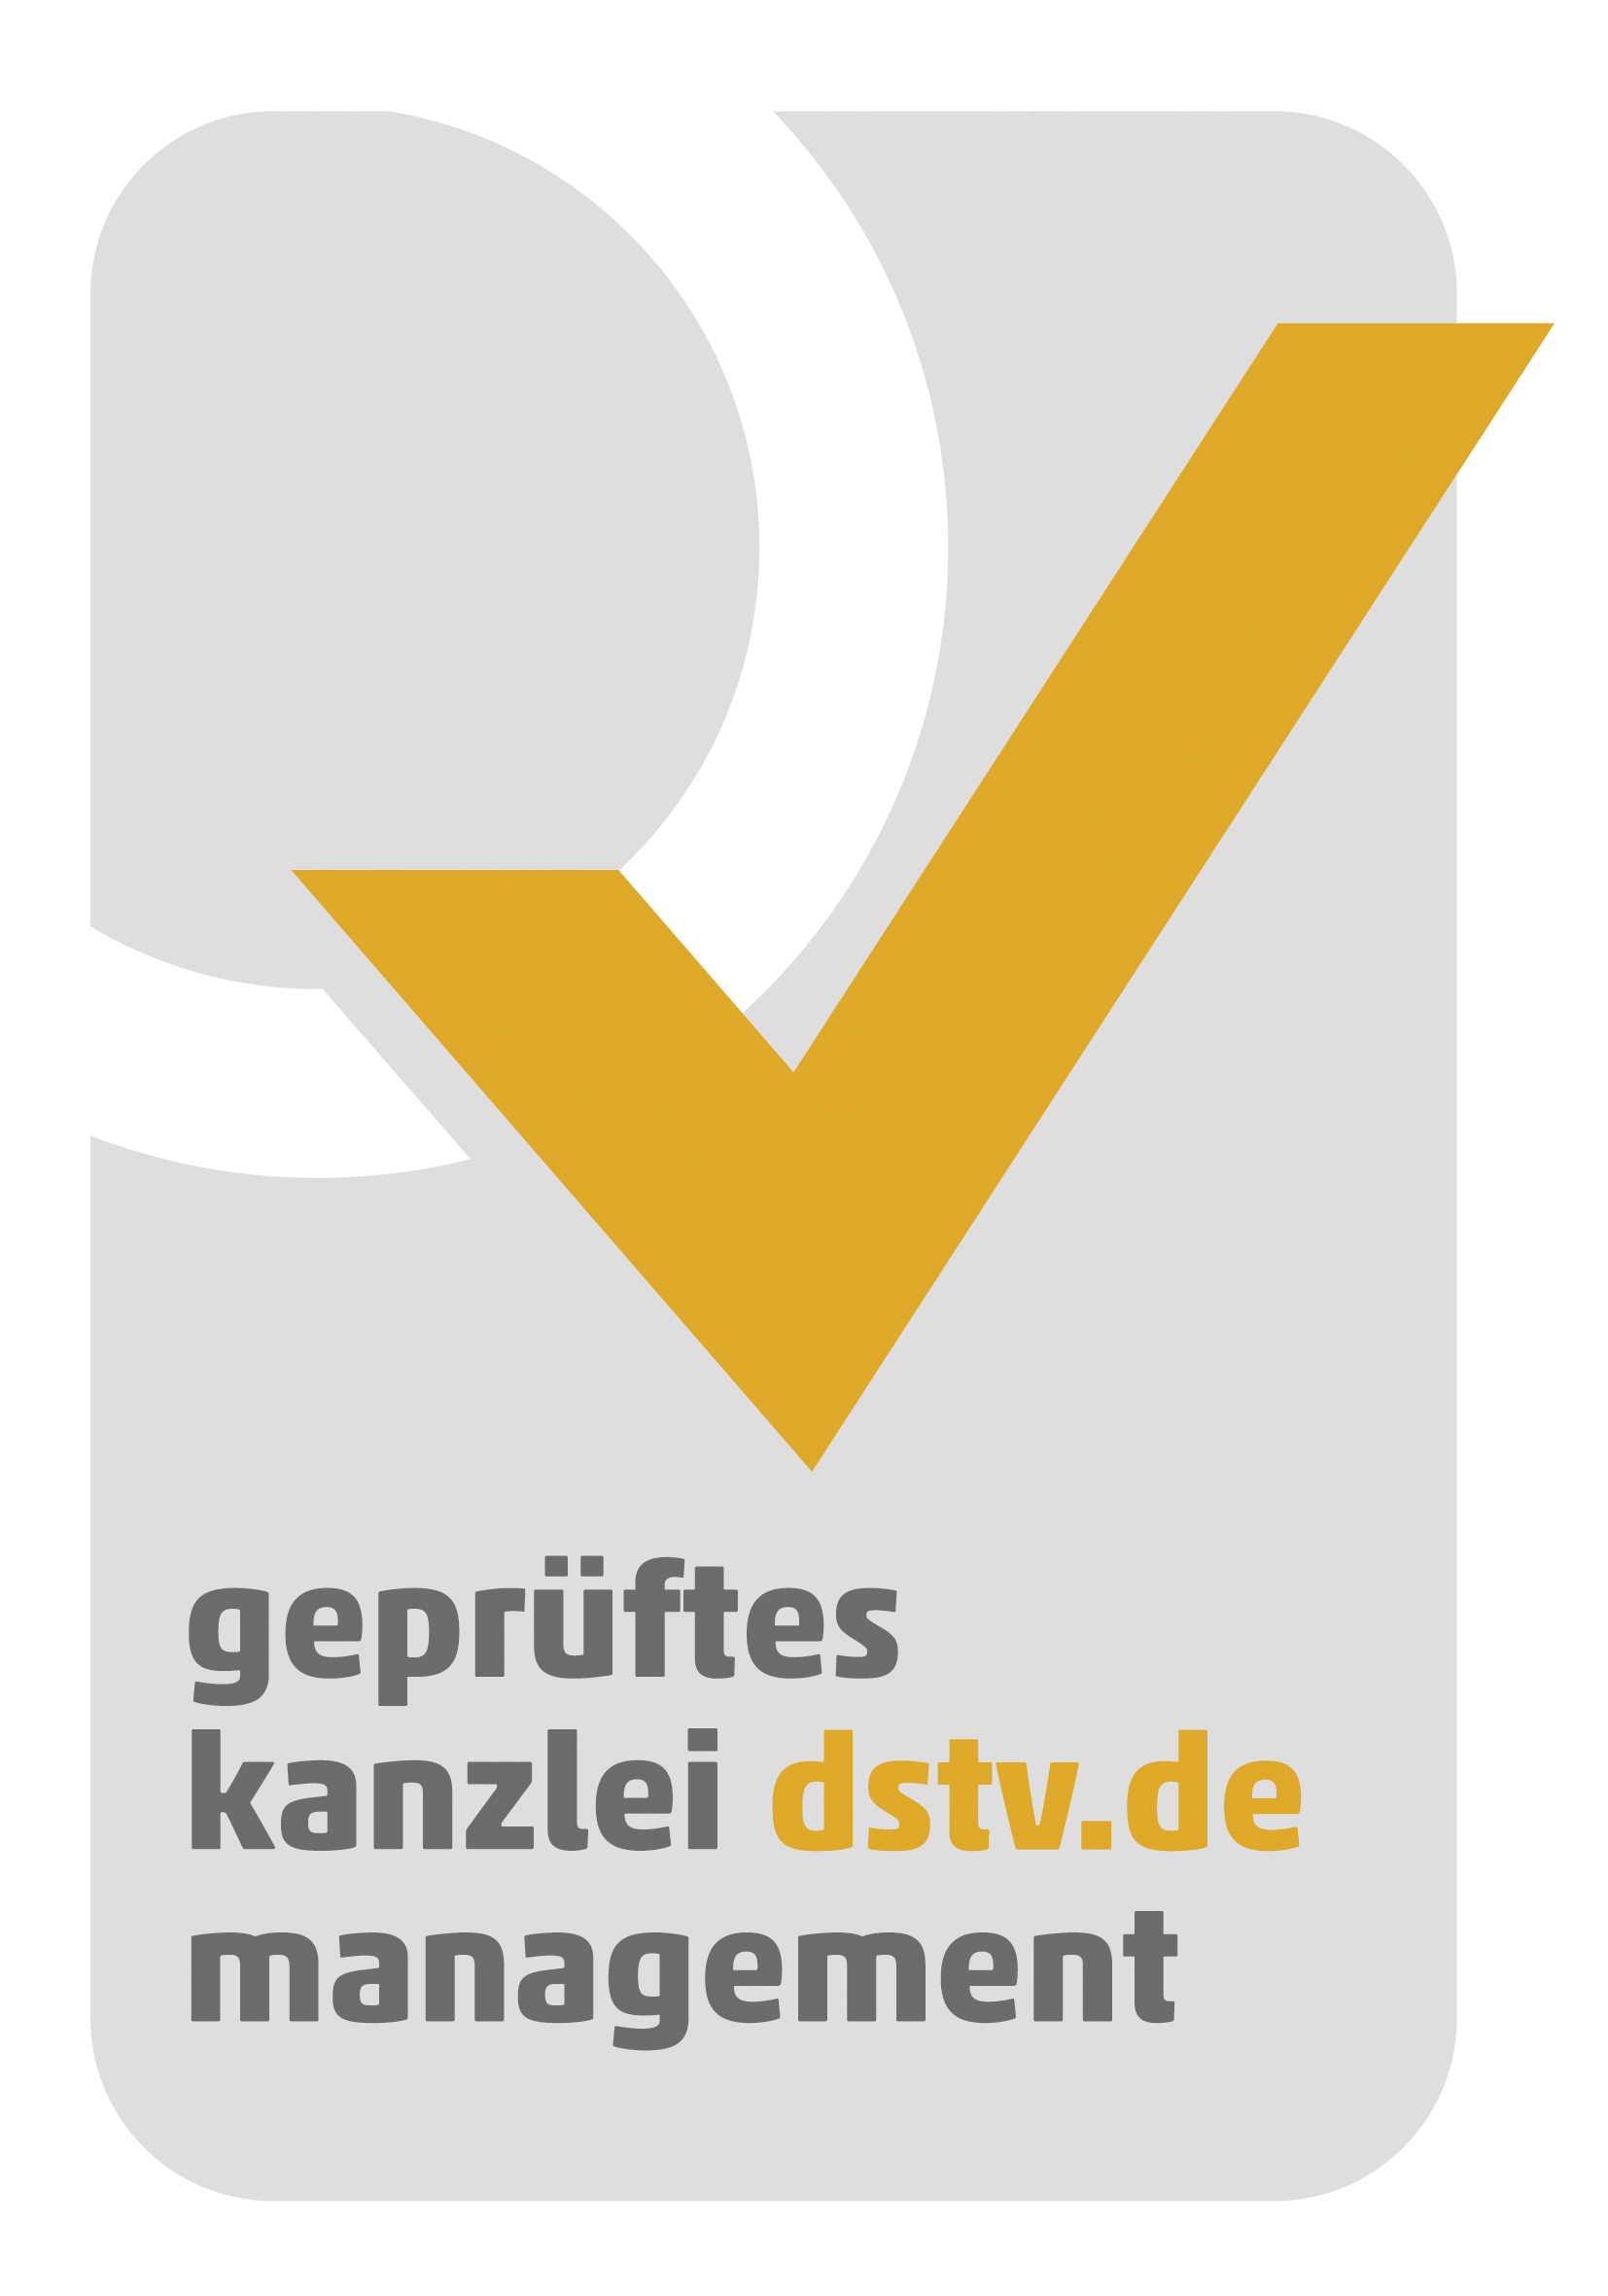 DSTV Qualitätssiegel